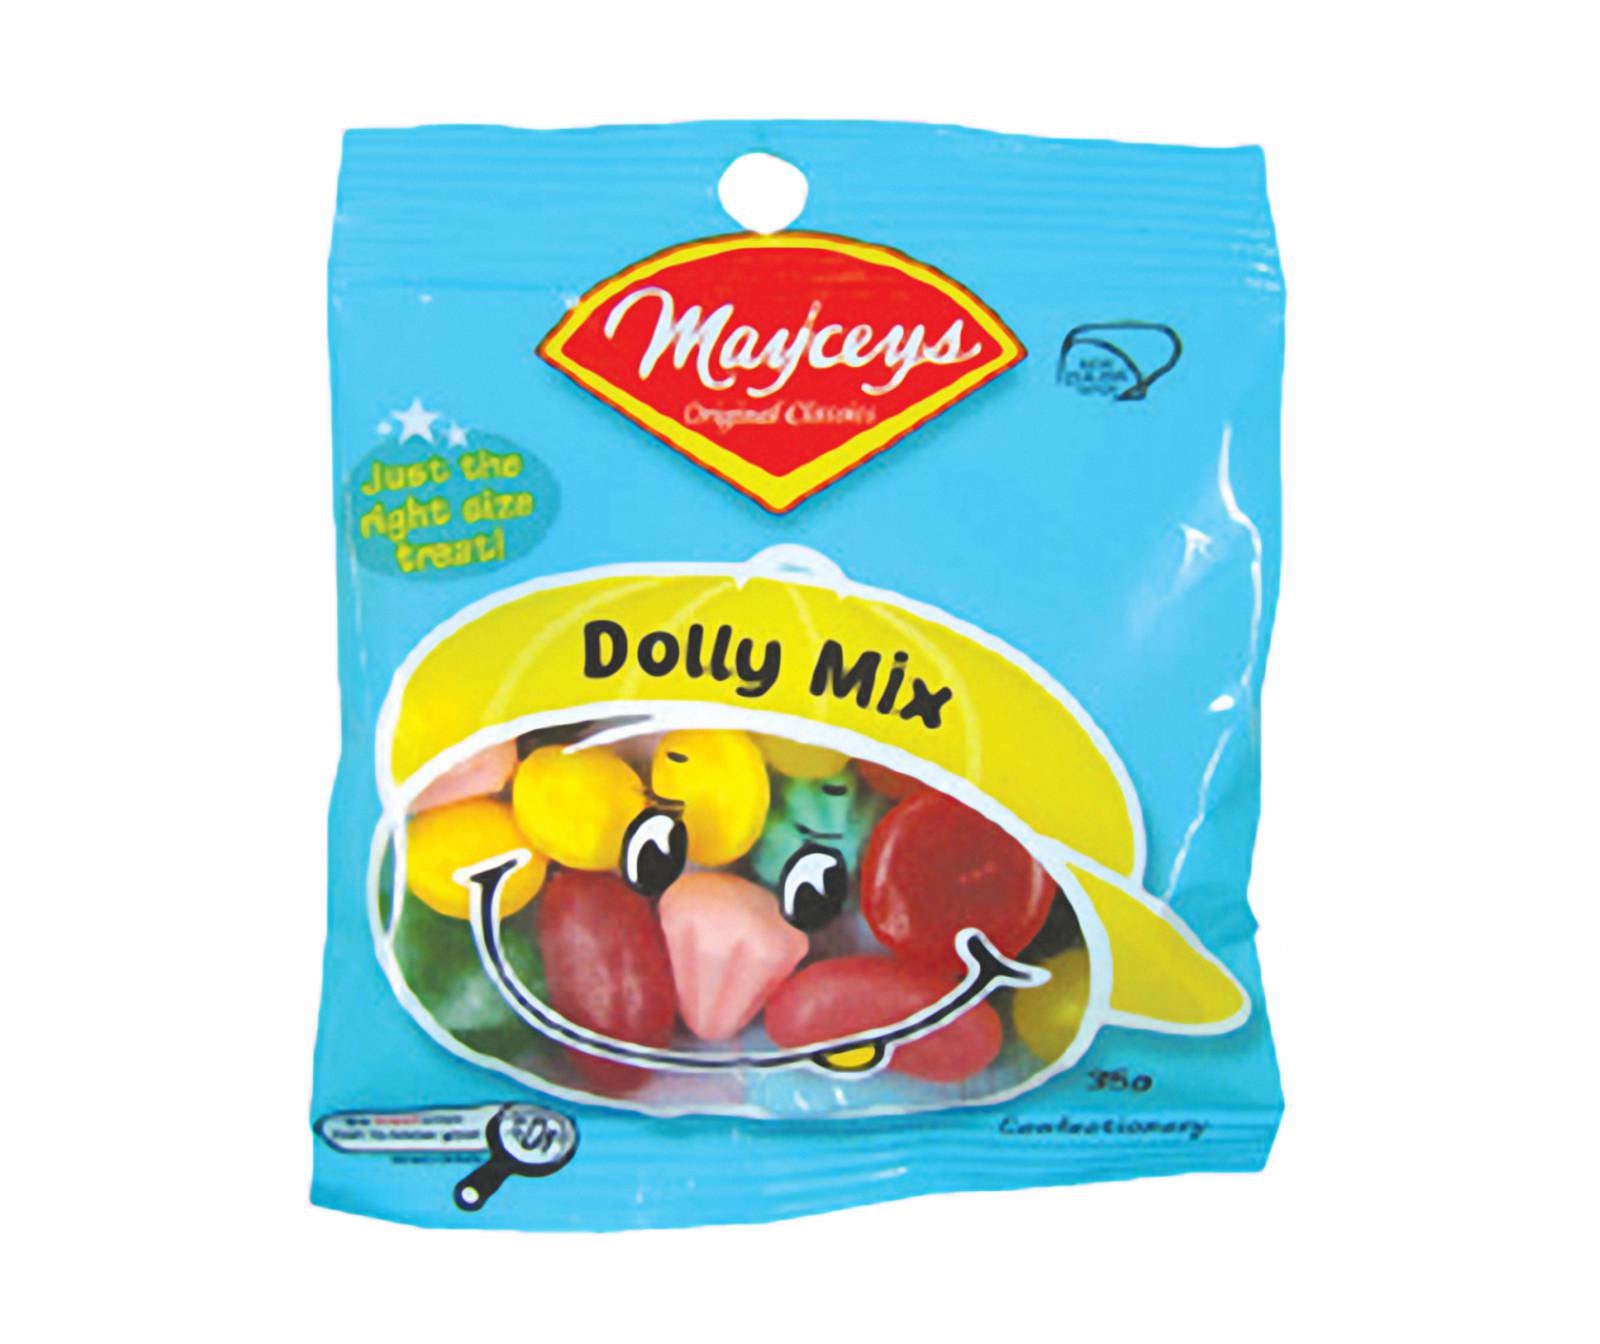 Mayceys Dolly Mix 35g